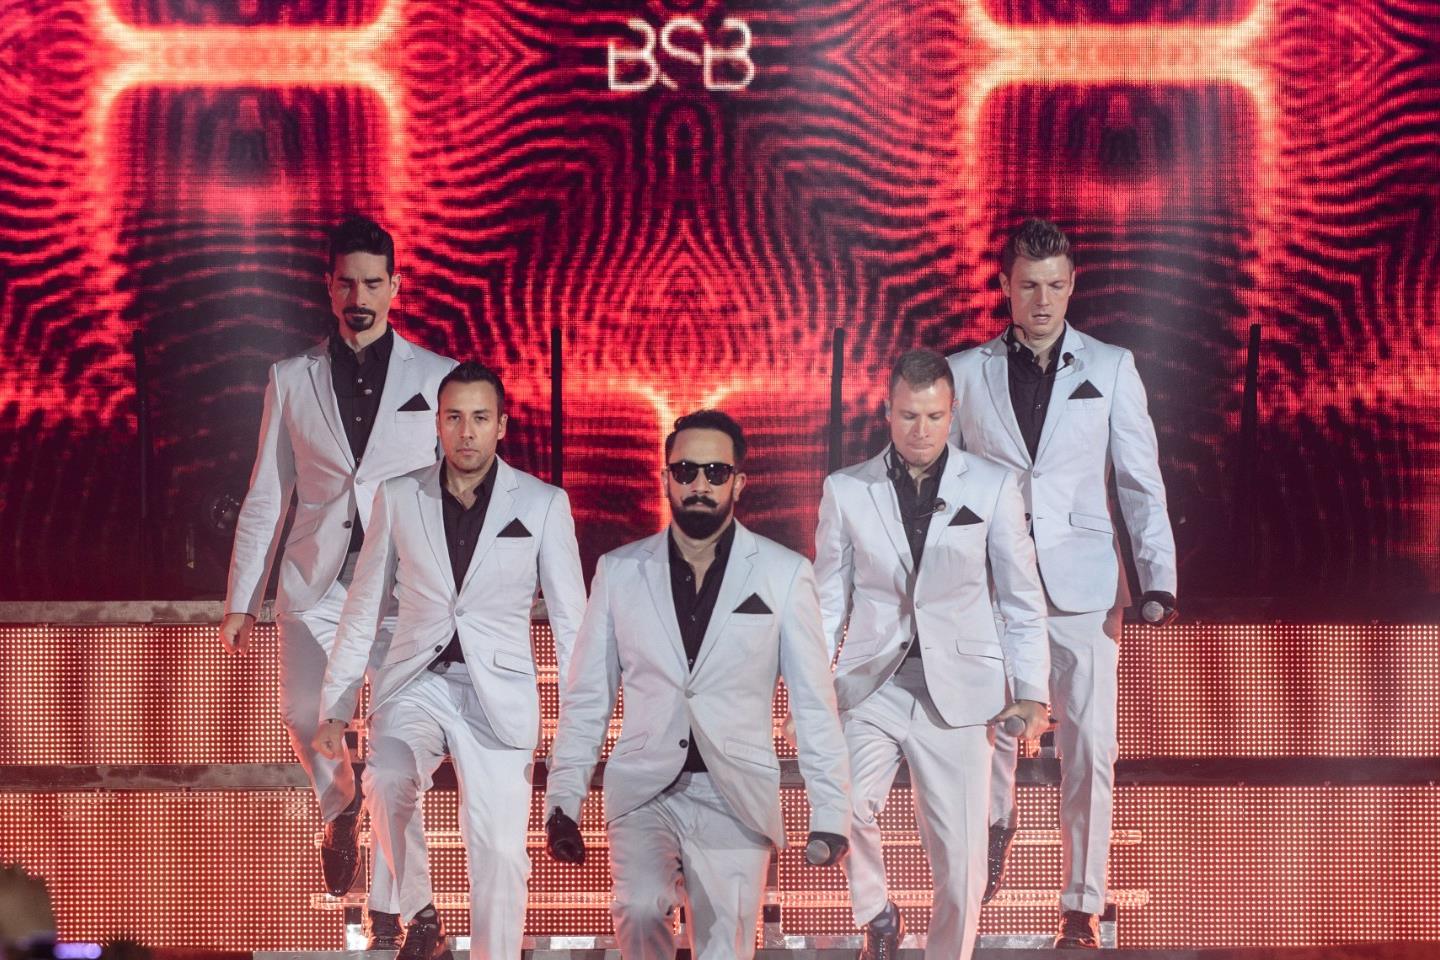 Backstreet Boys Tickets Backstreet Boys Tour 2022 and Concert Tickets